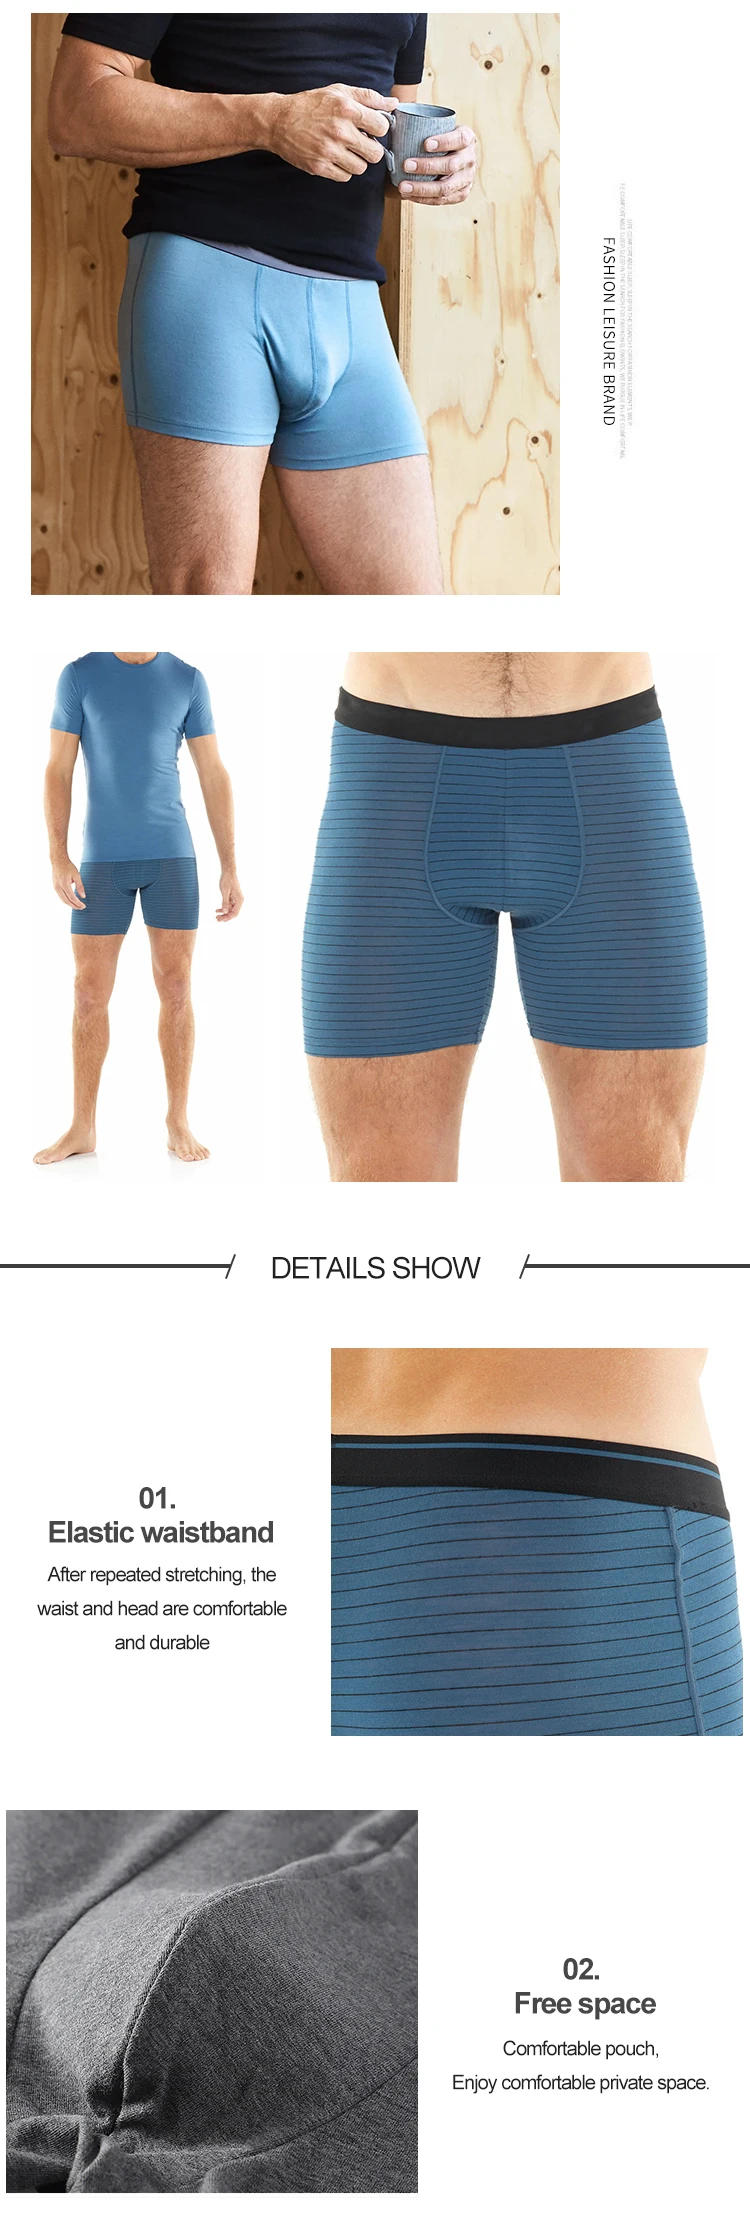 eneurp high quality compression merino wool bamboo pouch men's para hombre cuecas de mujer boxer shorts briefs underwear